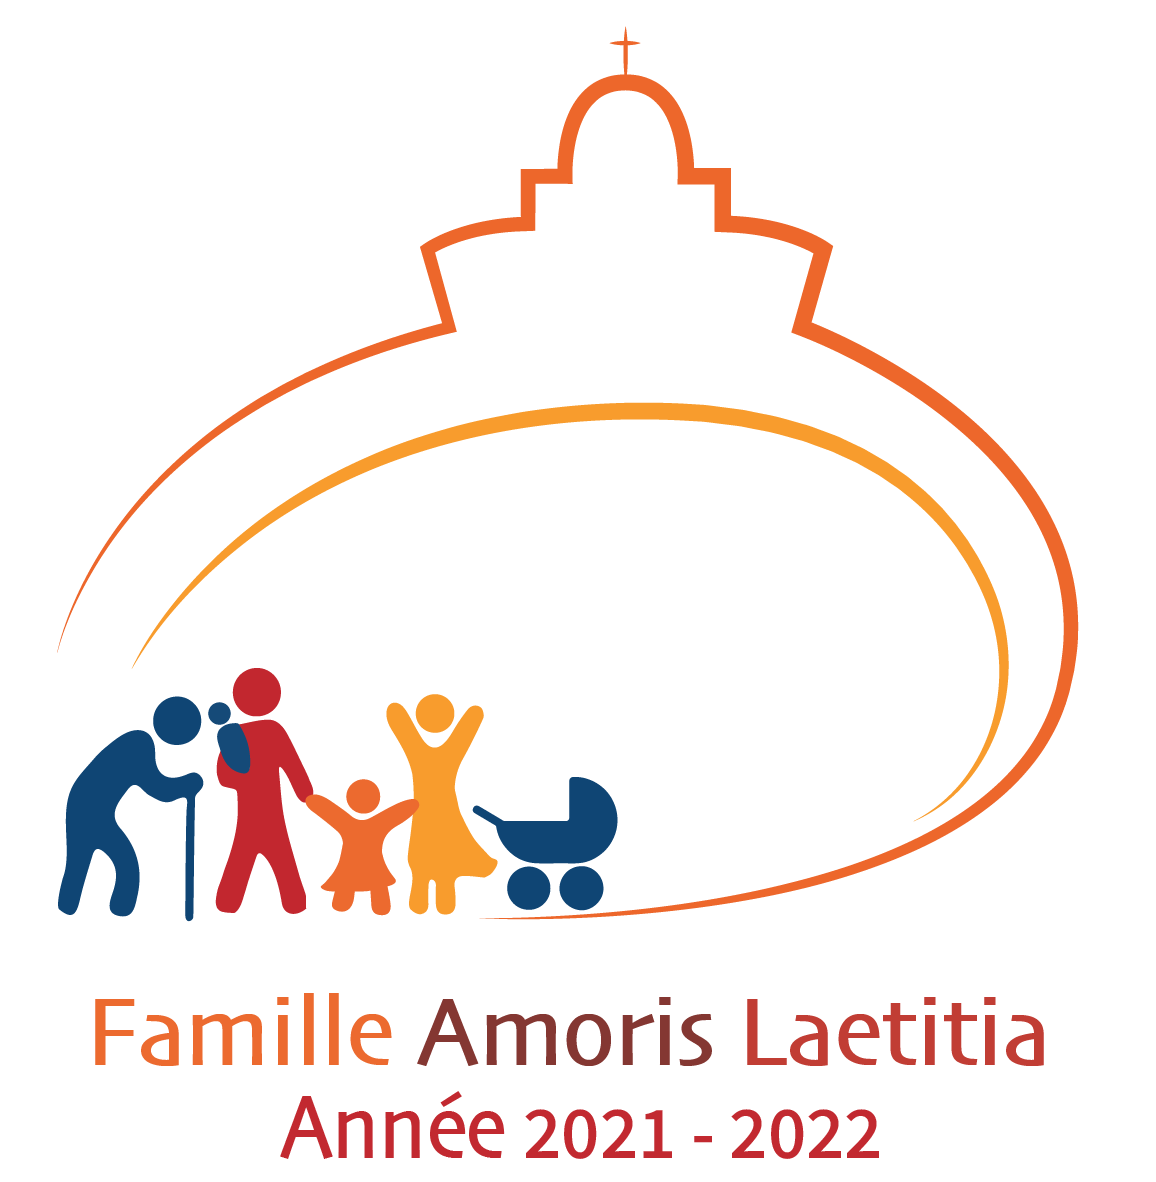 Année "Famille Amoris Lætitia"